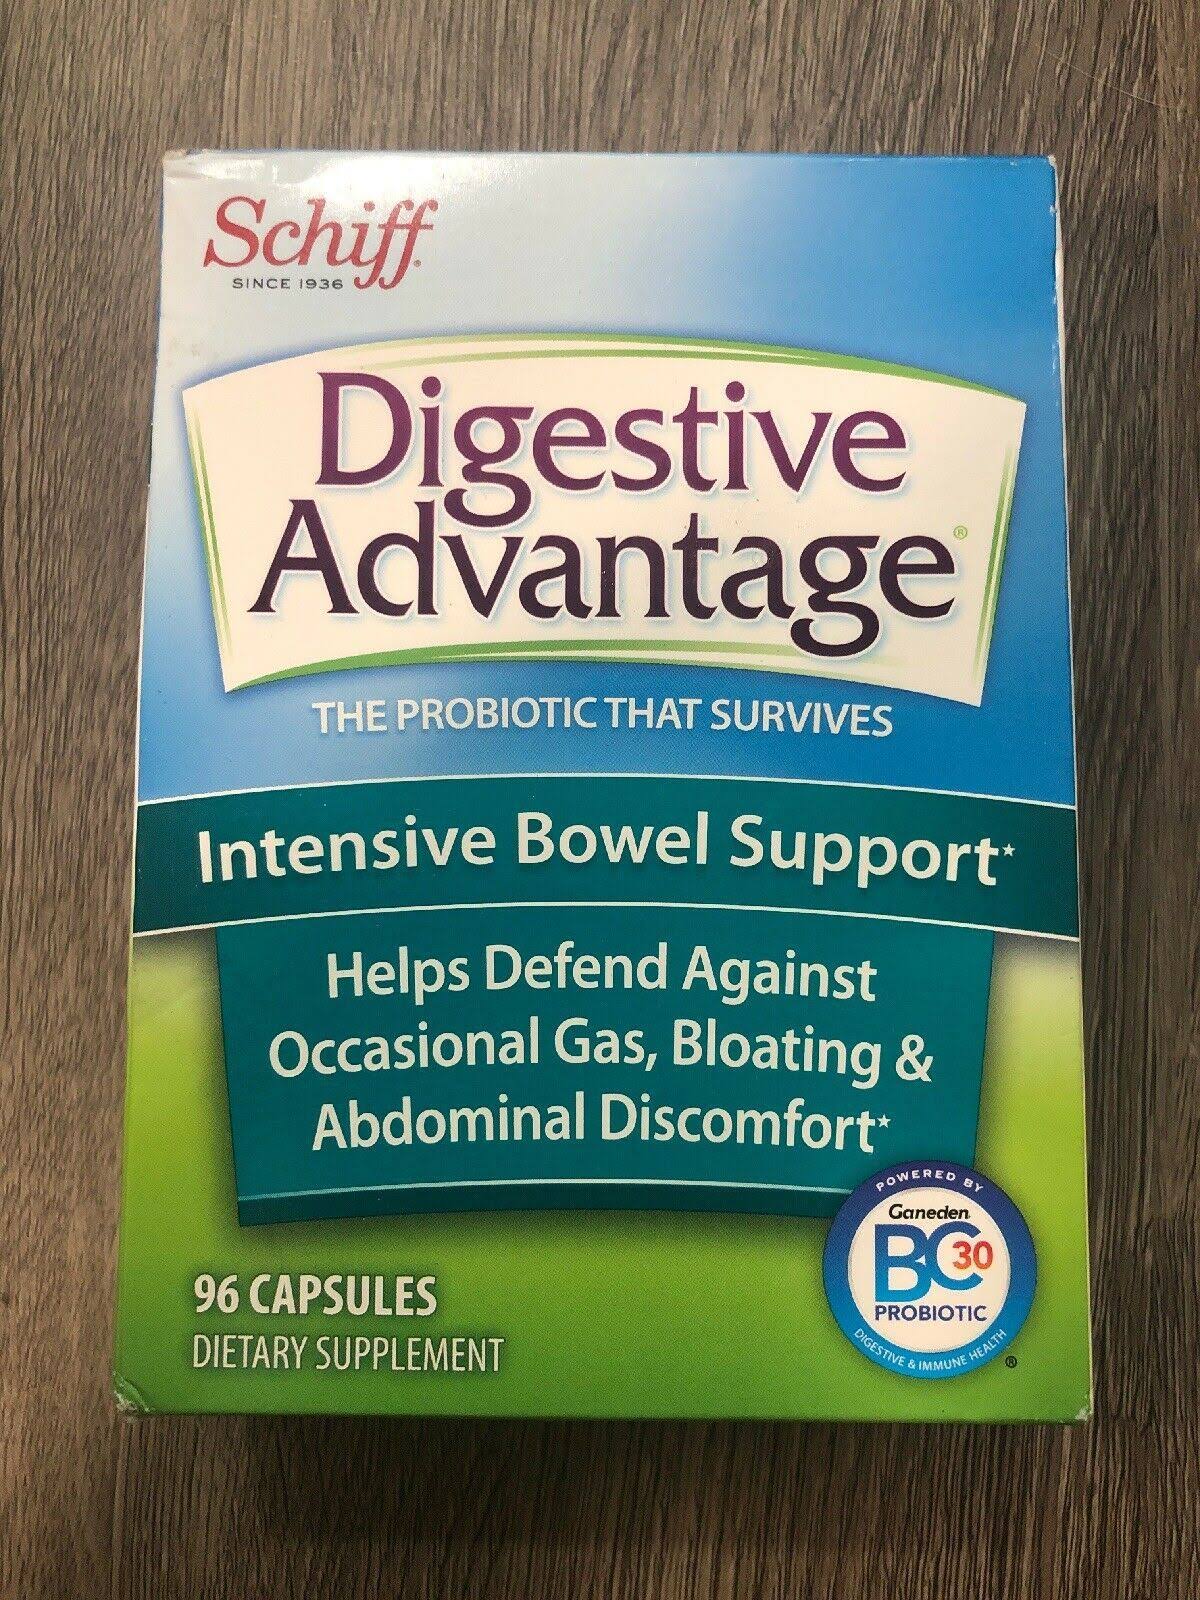 Schiff Digestive Advantage Intensive Bowel Support Supplement - 32 Capsules